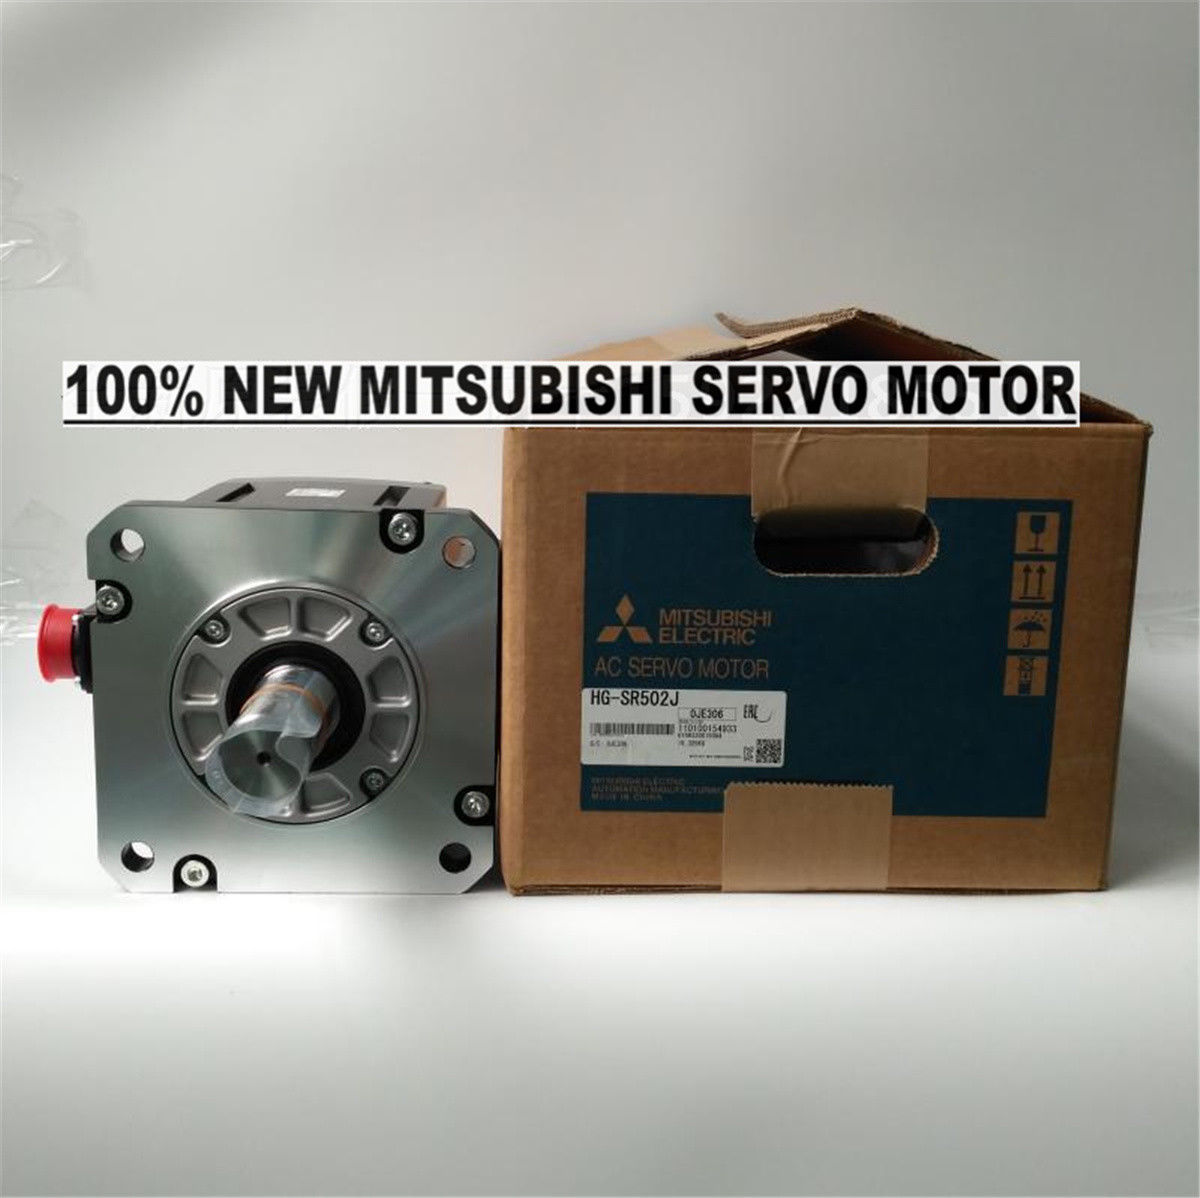 BRAND NEW Mitsubishi Servo Motor HG-SR502J in box HGSR502J